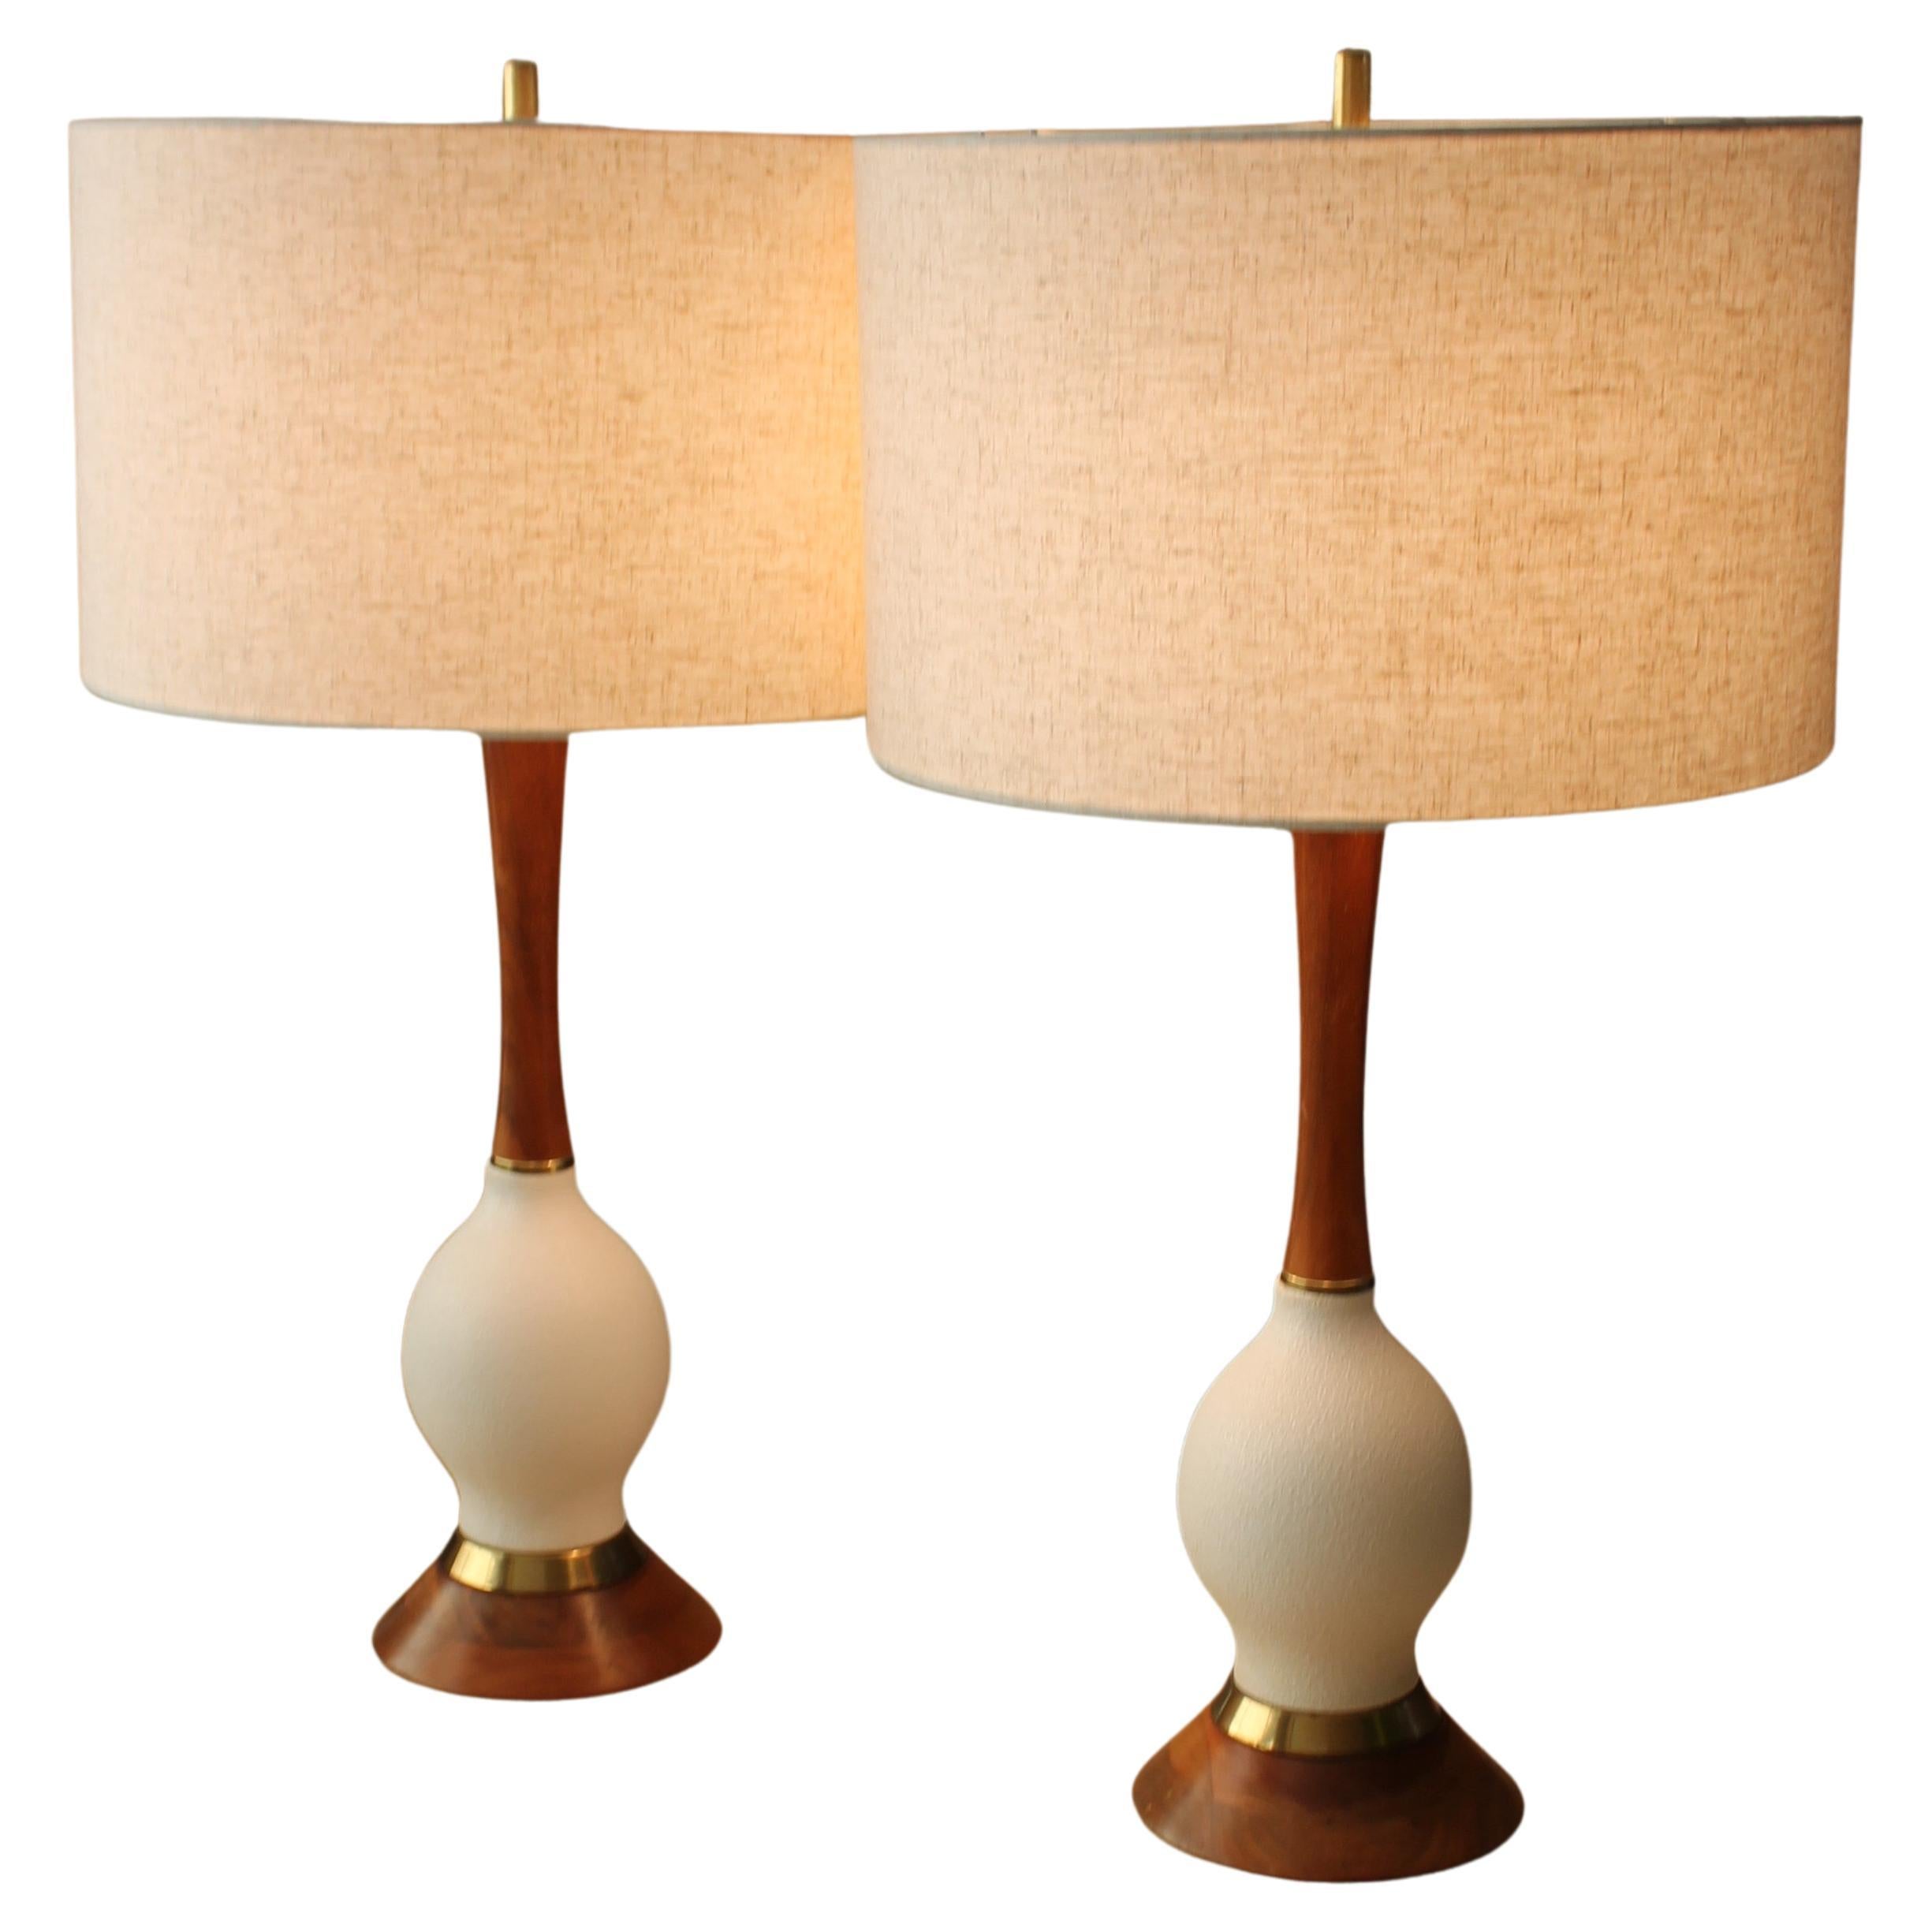 PAIR! Mid Century Danish Modern Table Lamps Brass Teak Plaster! Clean Design!